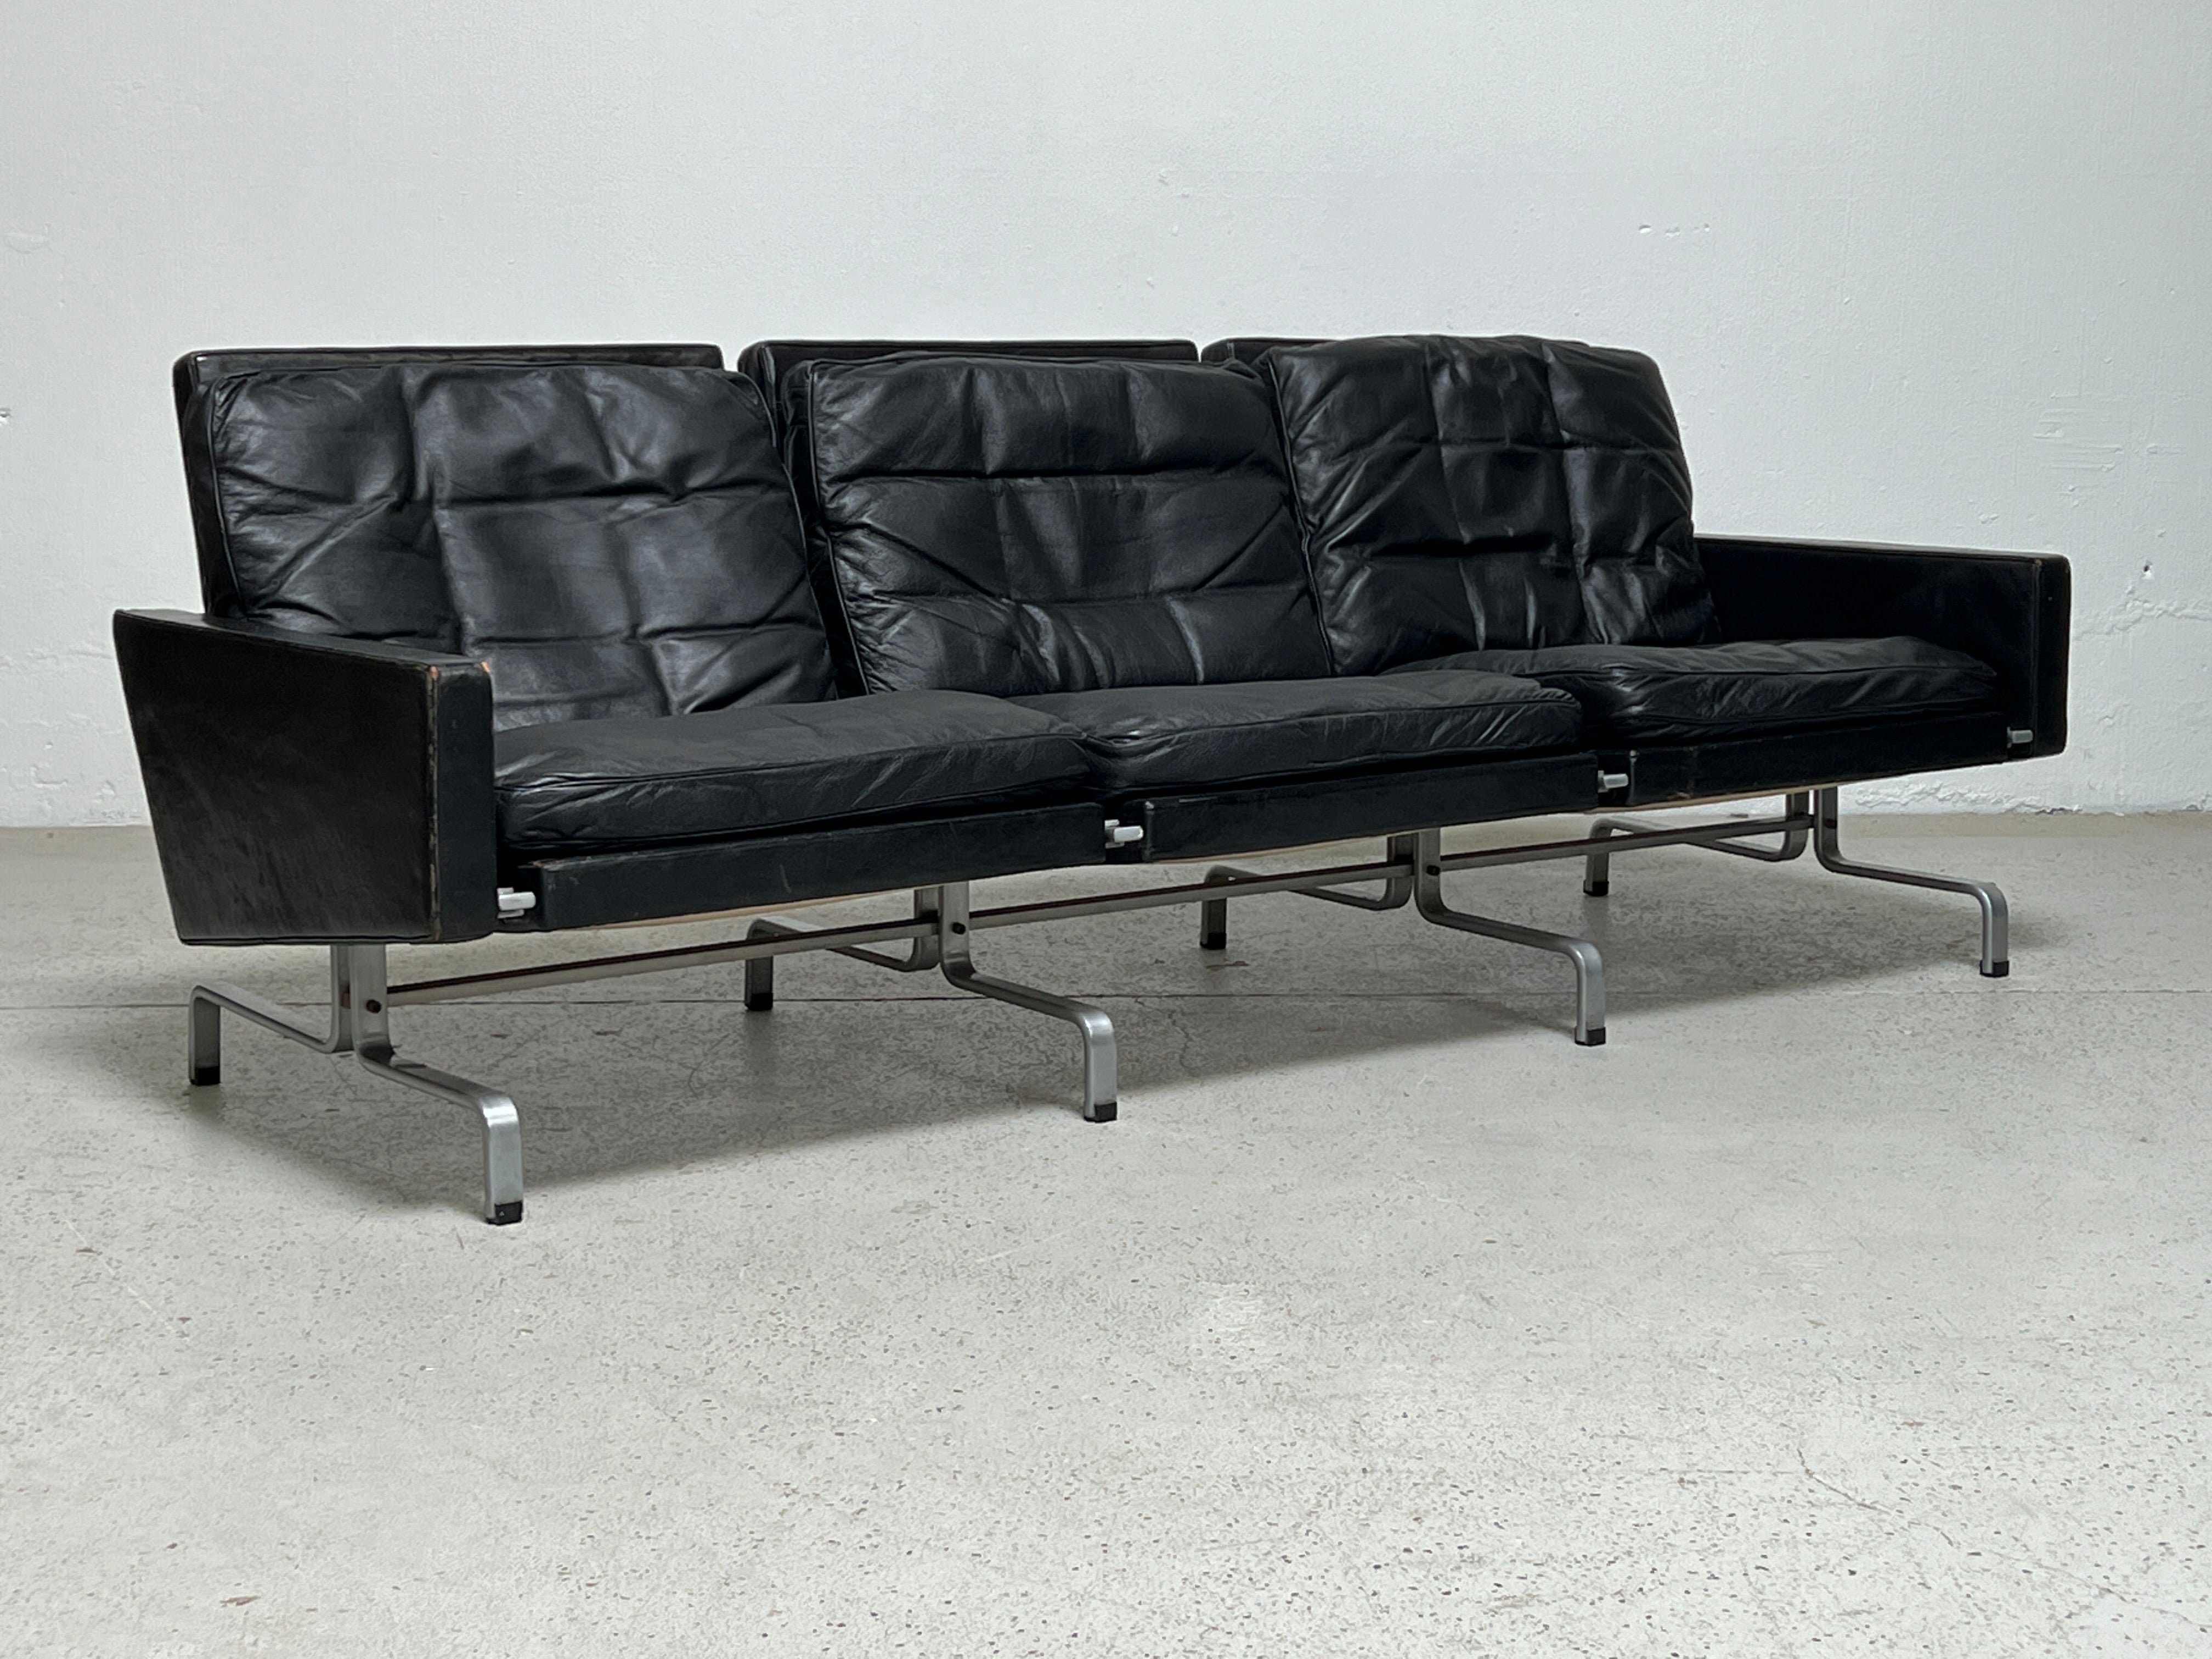 PK-31/3 sofa by Poul Kjærholm for E. Kold Christensen in original patinated black leather.